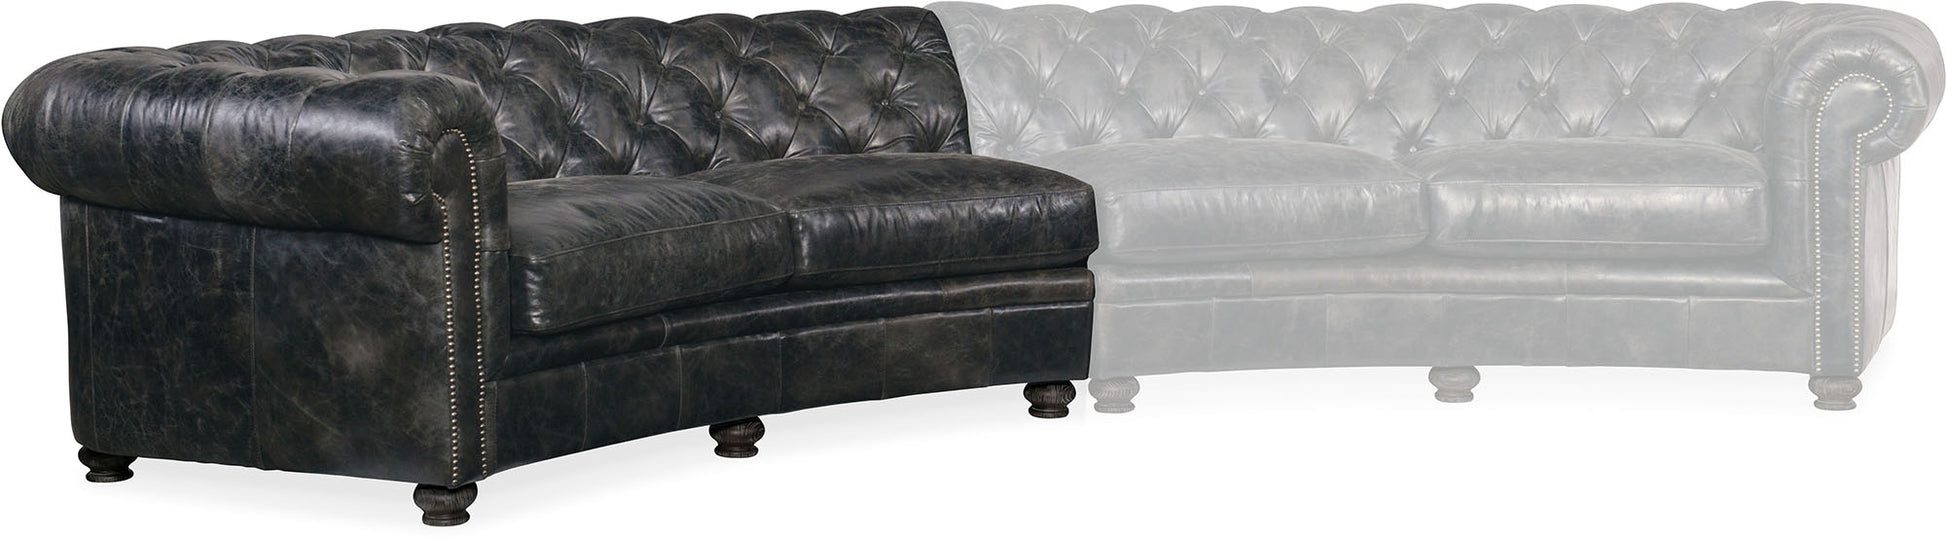 Hooker Furniture Living Room Weldon Leather Tufted Sectional Sofa - Dreamart Gallery